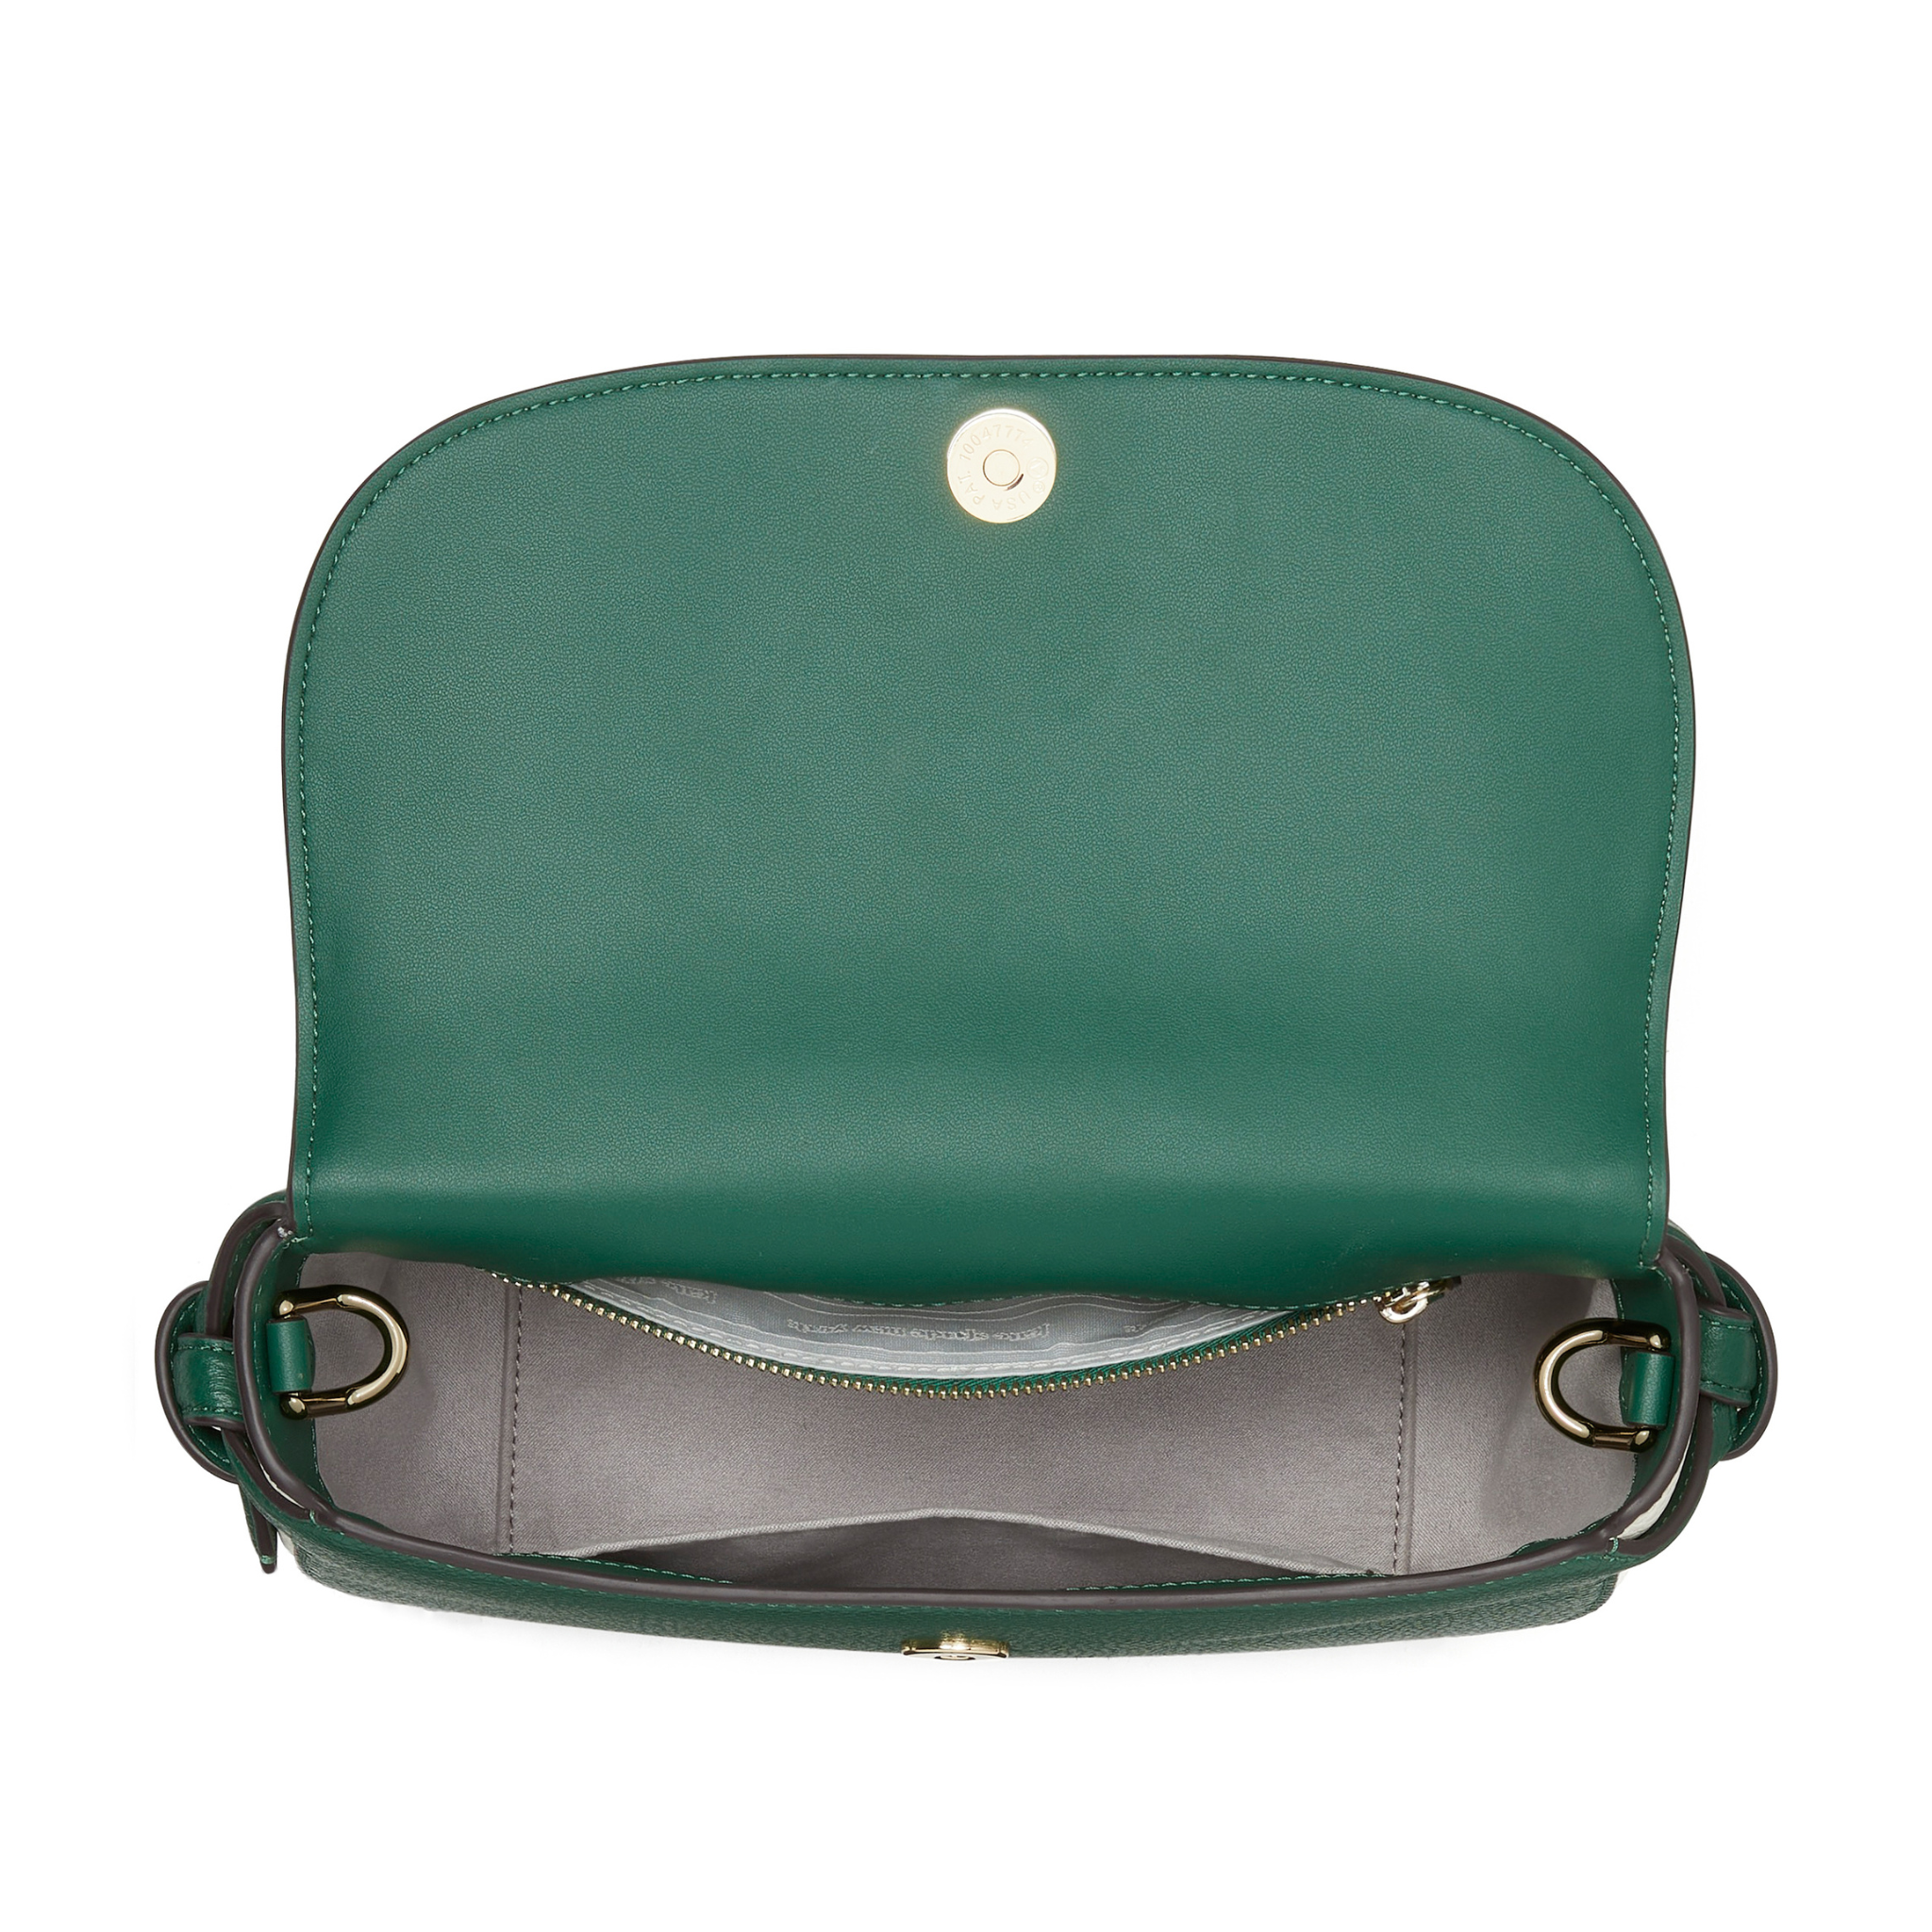 Buy Kate Spade Staci Colorblock Medium Satchel Saffiano Leather Crossbody  Bag Purse Handbag (Green Multi) at Amazon.in